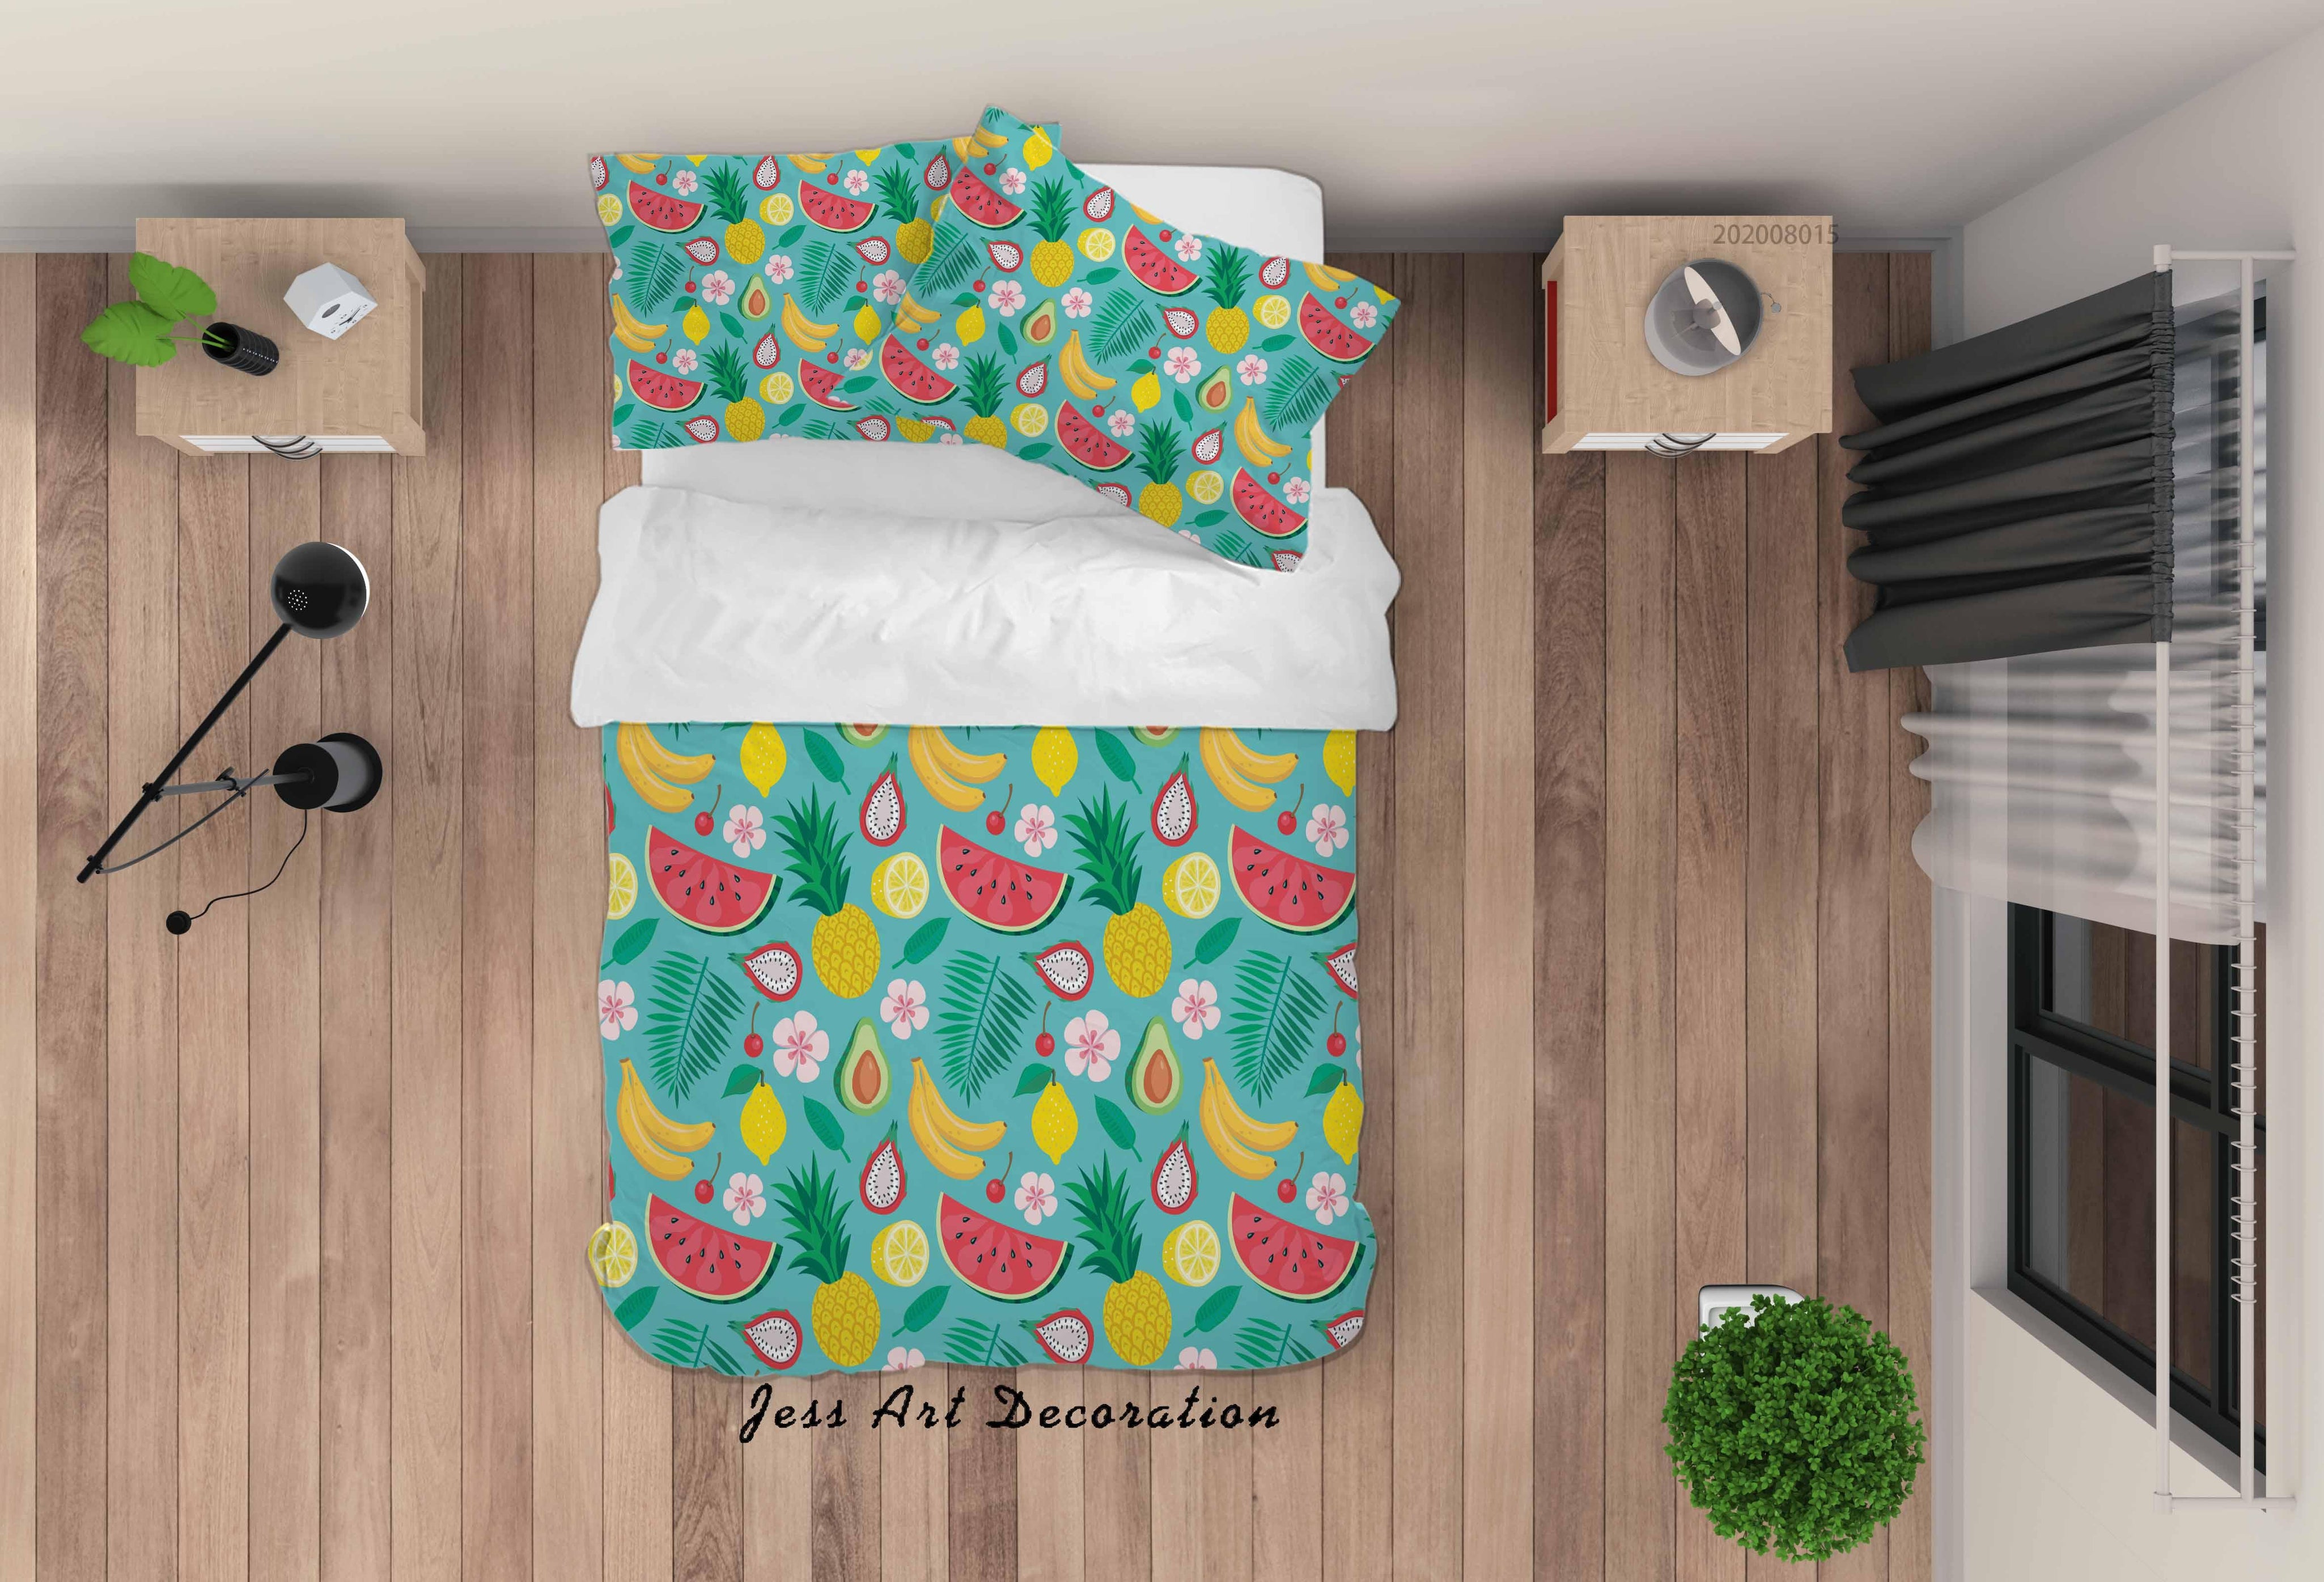 3D Watermelon Banana Fruity Green Quilt Cover Set Bedding Set Duvet Cover Pillowcases LXL- Jess Art Decoration